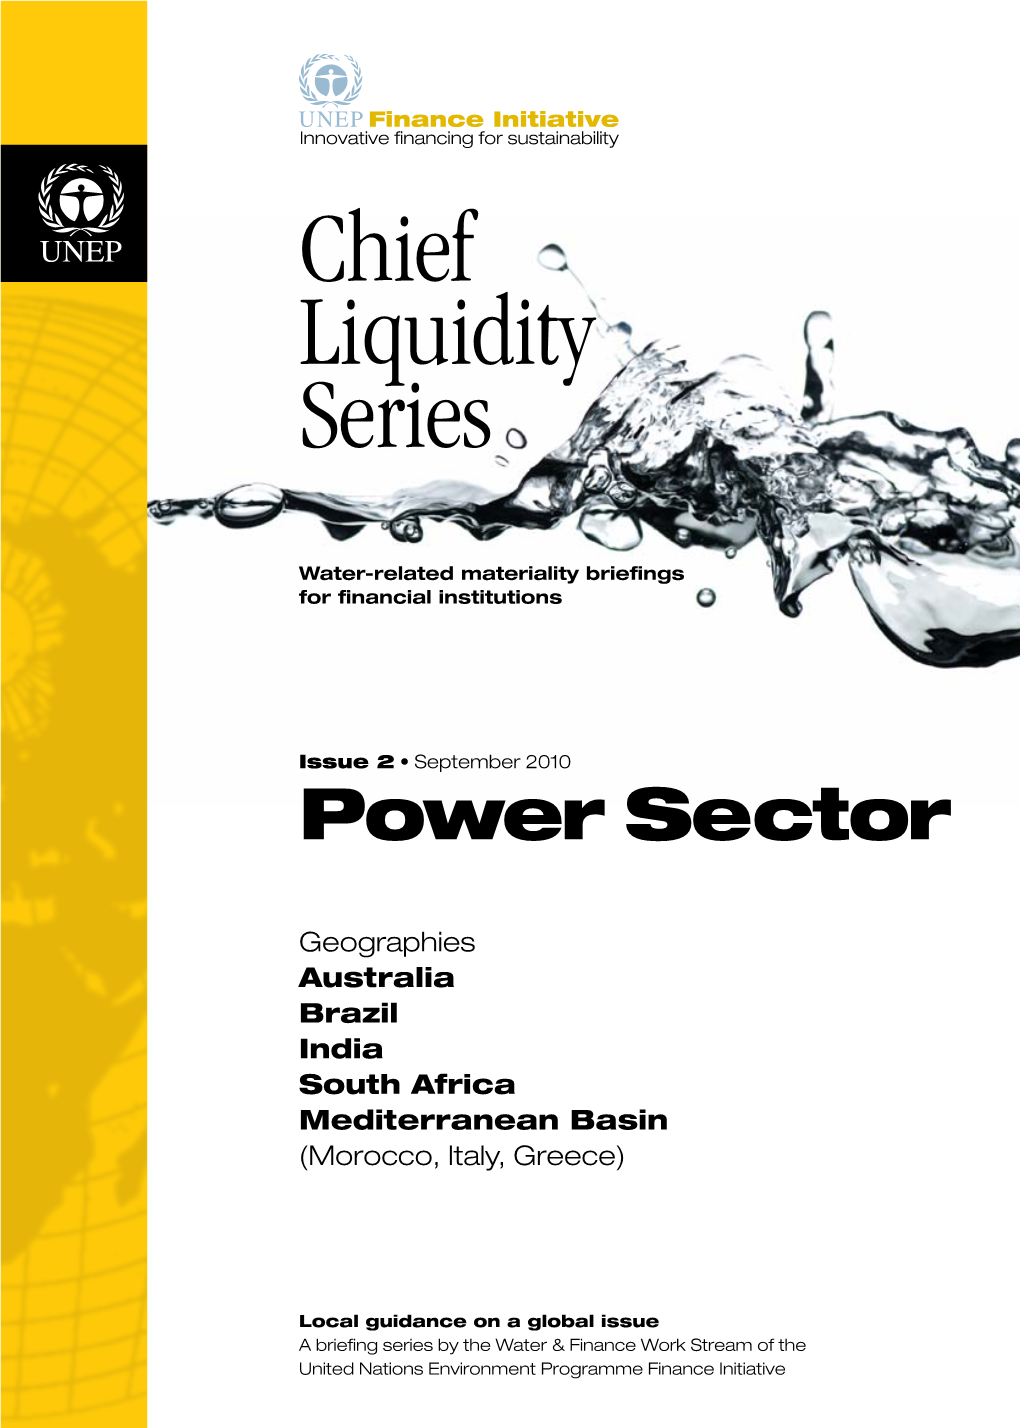 Chief Liquidity Series